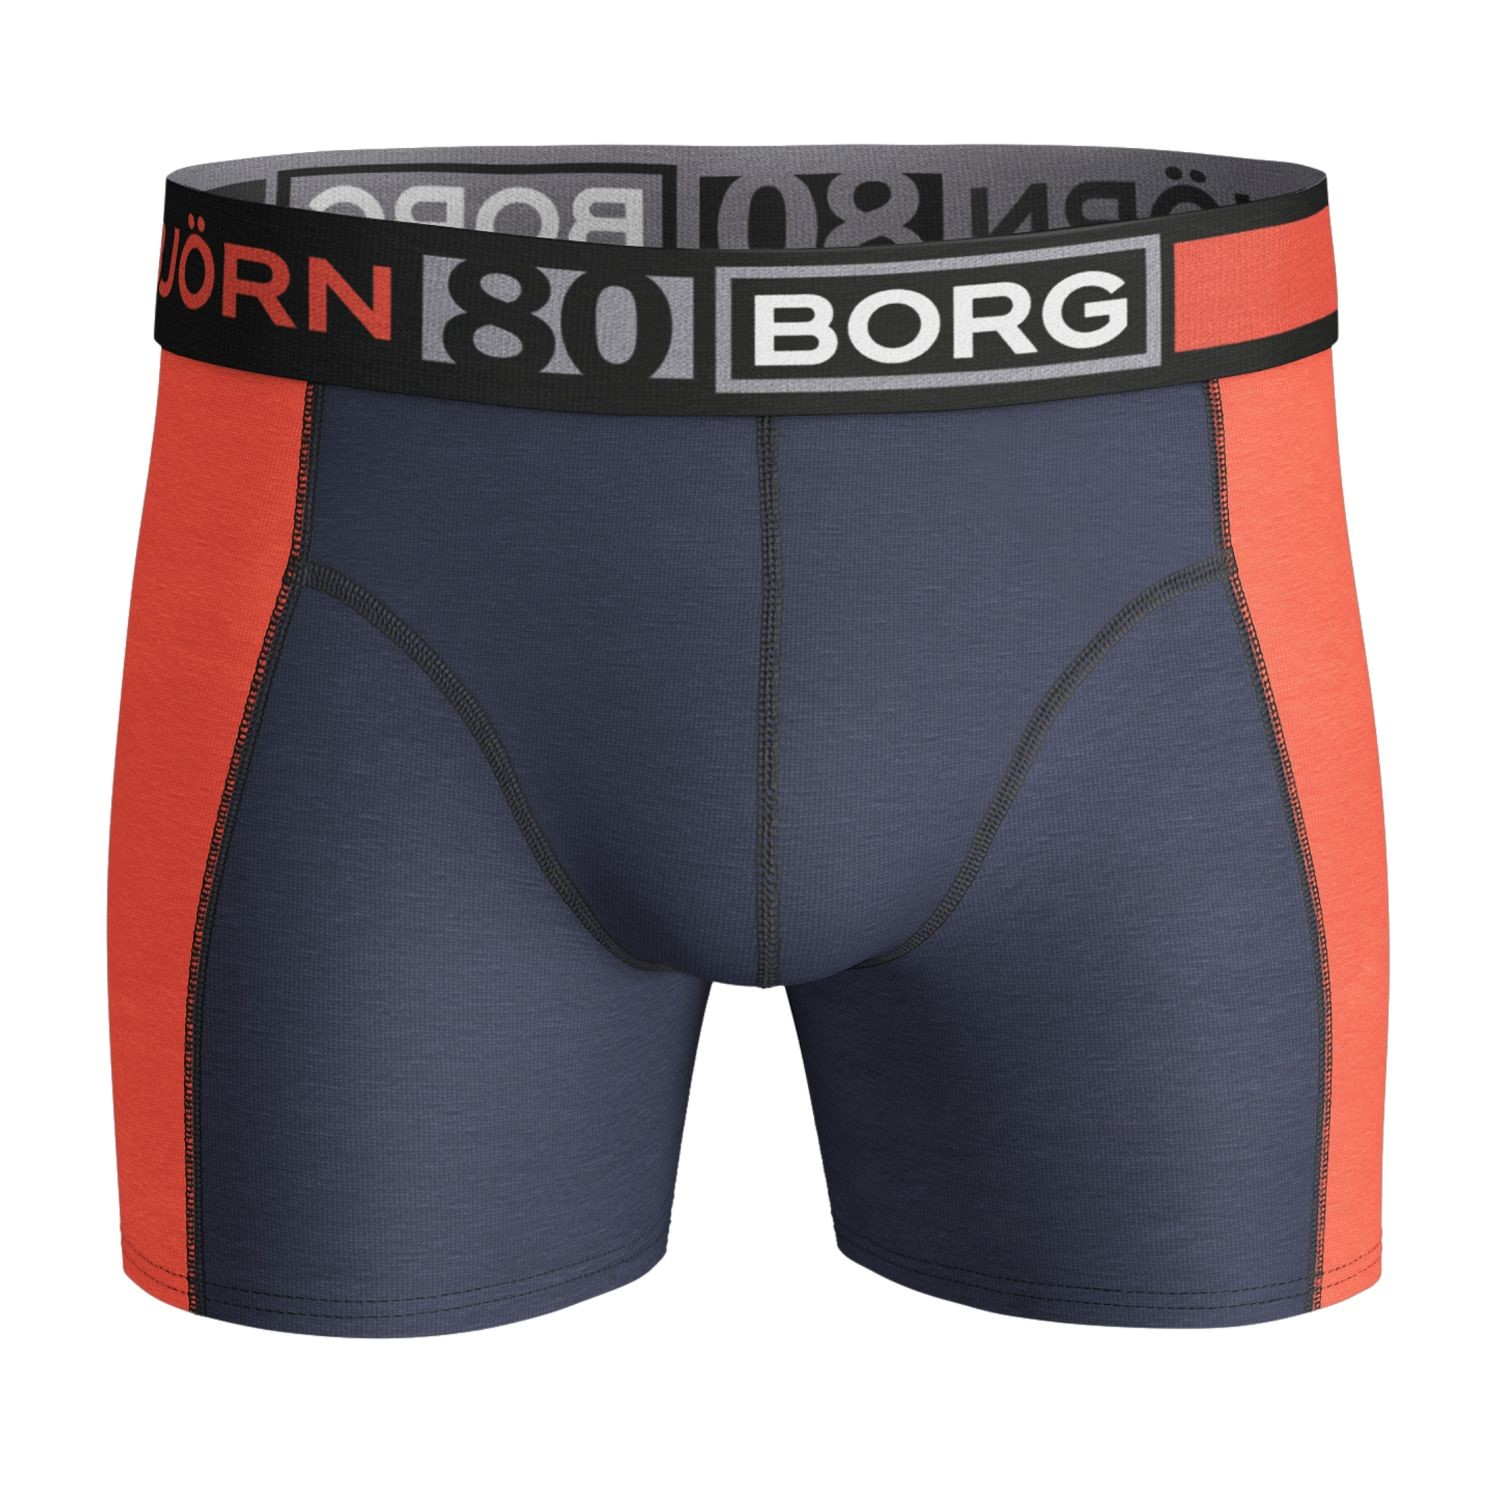 Björn Borg Block 80 Shorts 